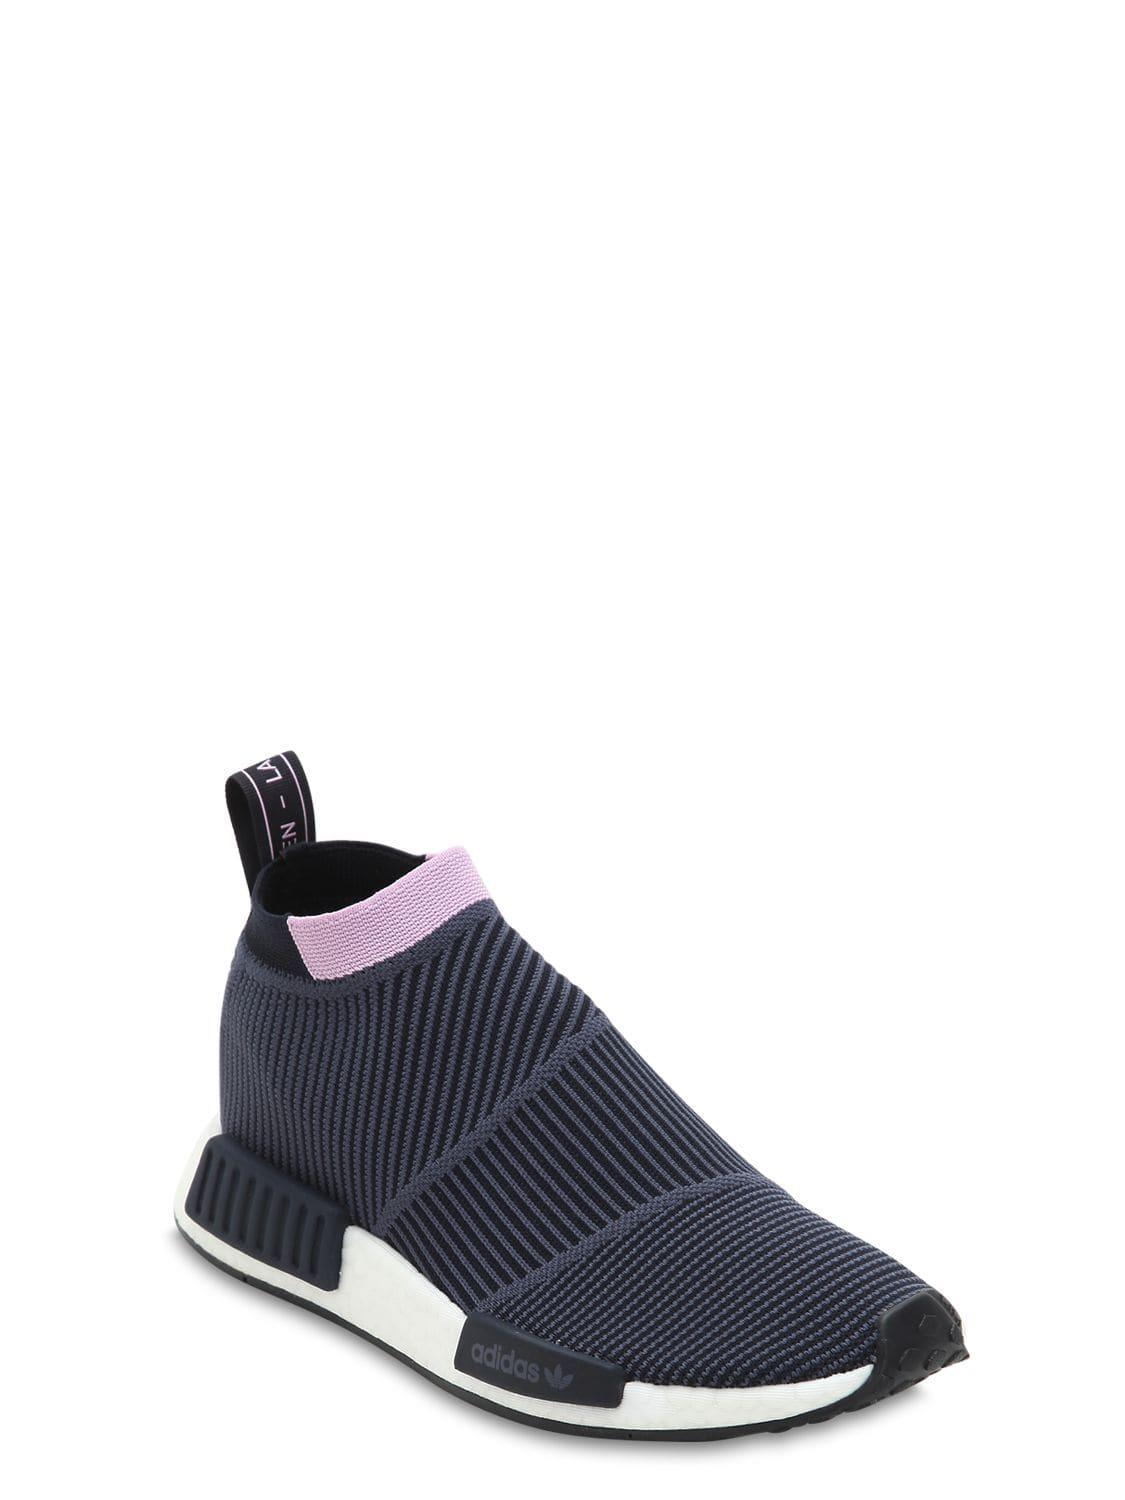 spade Boghandel blåhval adidas Originals Nmd Cs1 Primeknit Sneakers in Grey (Gray) - Lyst